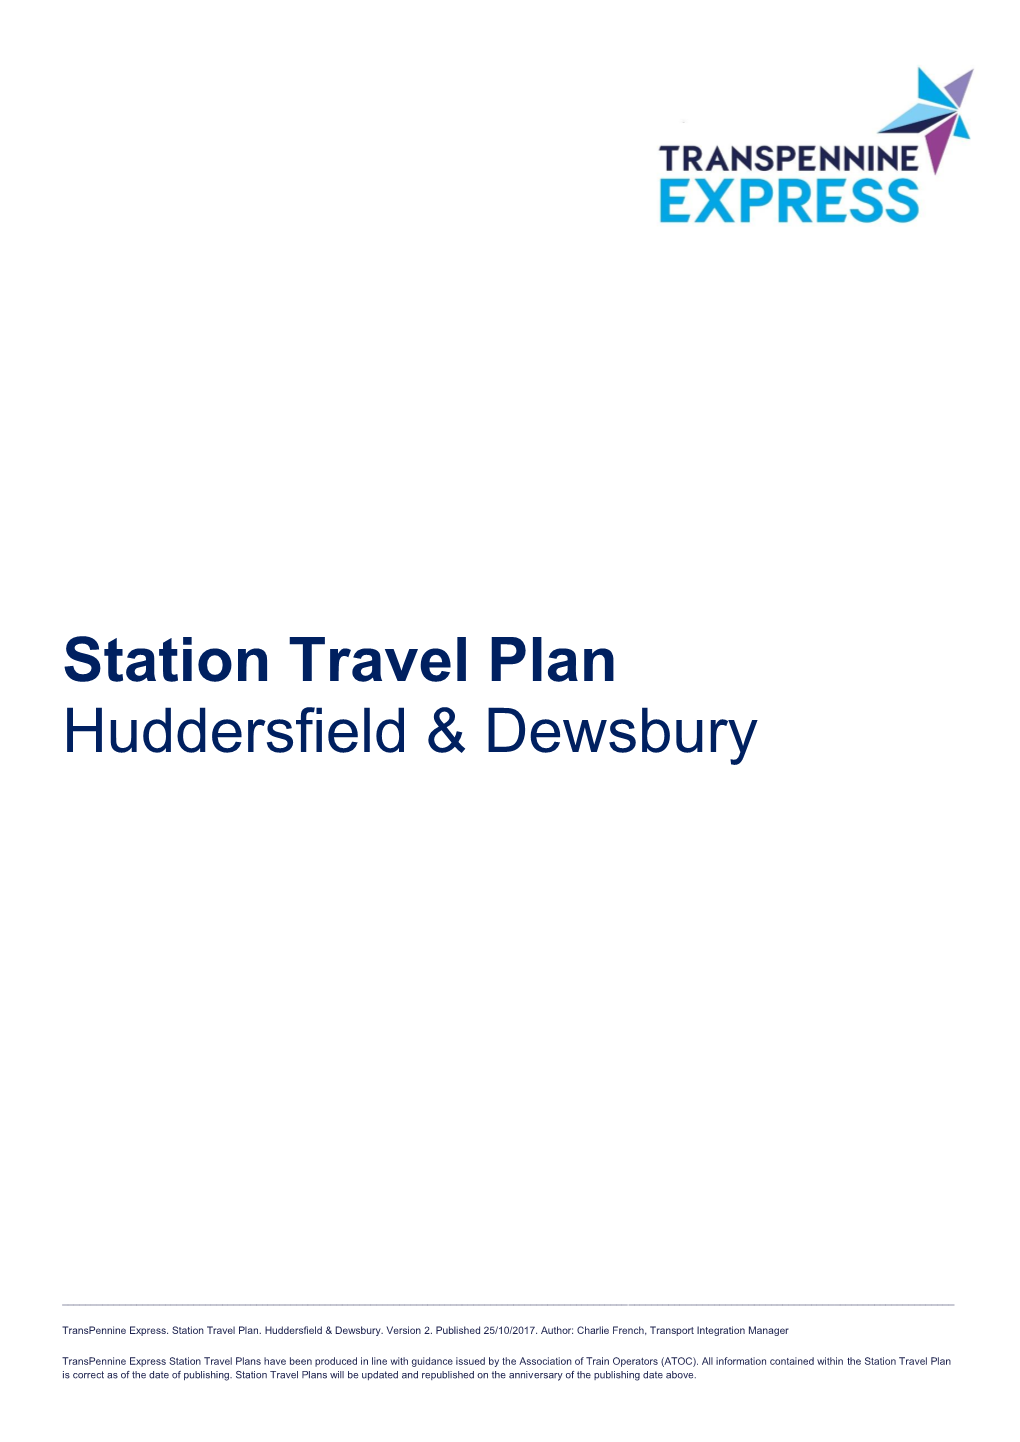 Station Travel Plan Huddersfield & Dewsbury